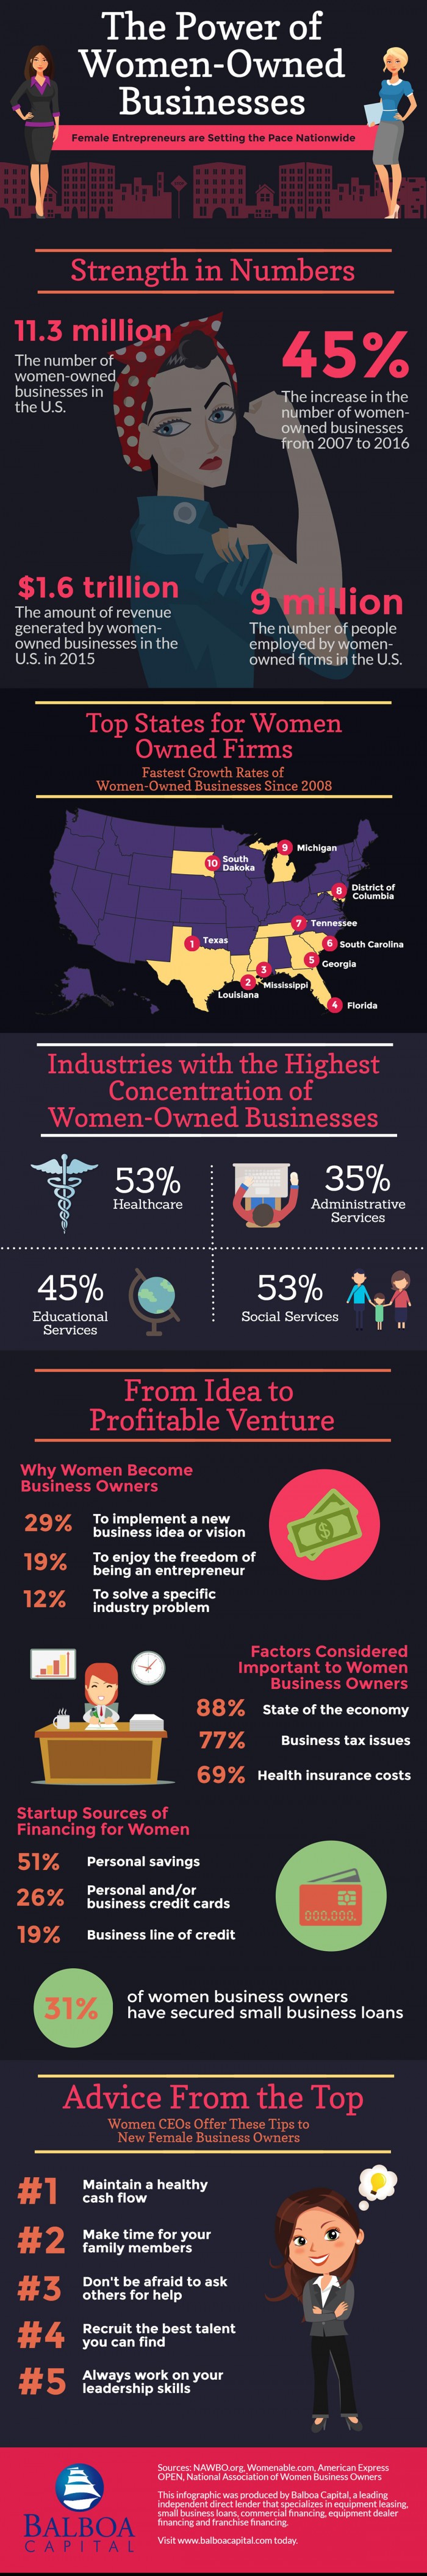 women-in-business-infographic-balboa-capital